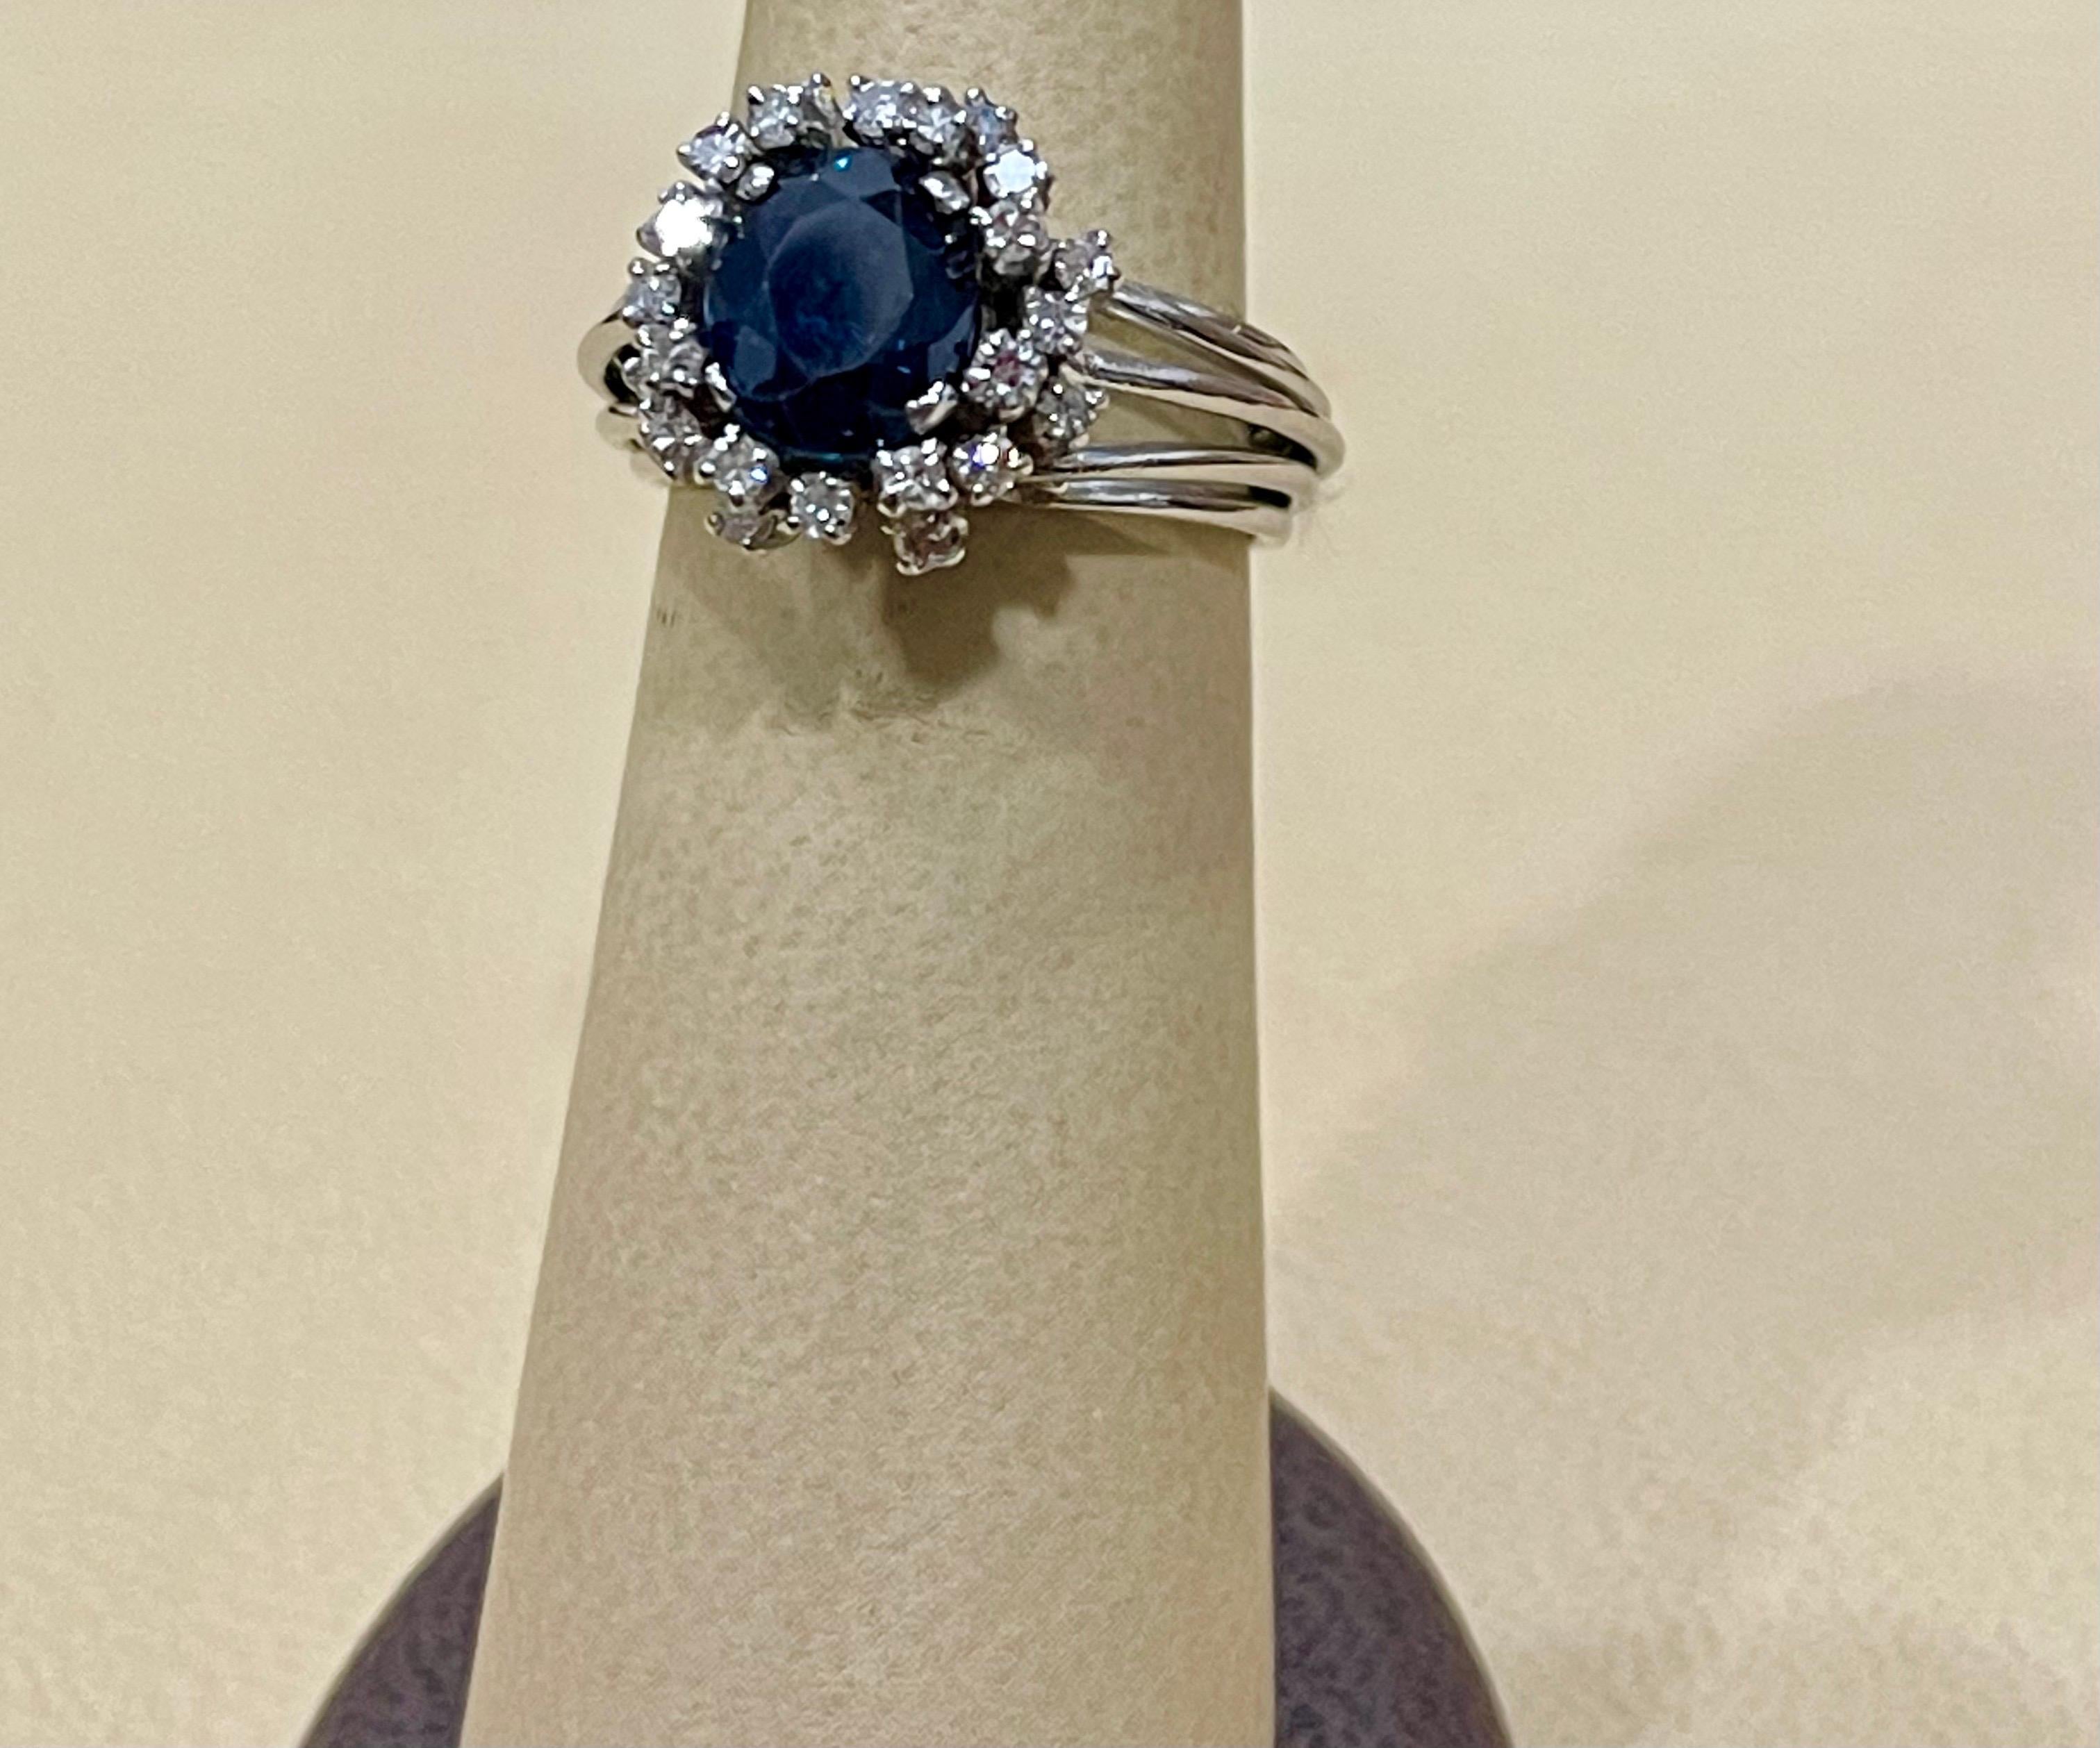 3 Ct Mid Night Blue Sapphire and 0.25 Ct Diamond Cocktail Ring, Platinum, Estate 3